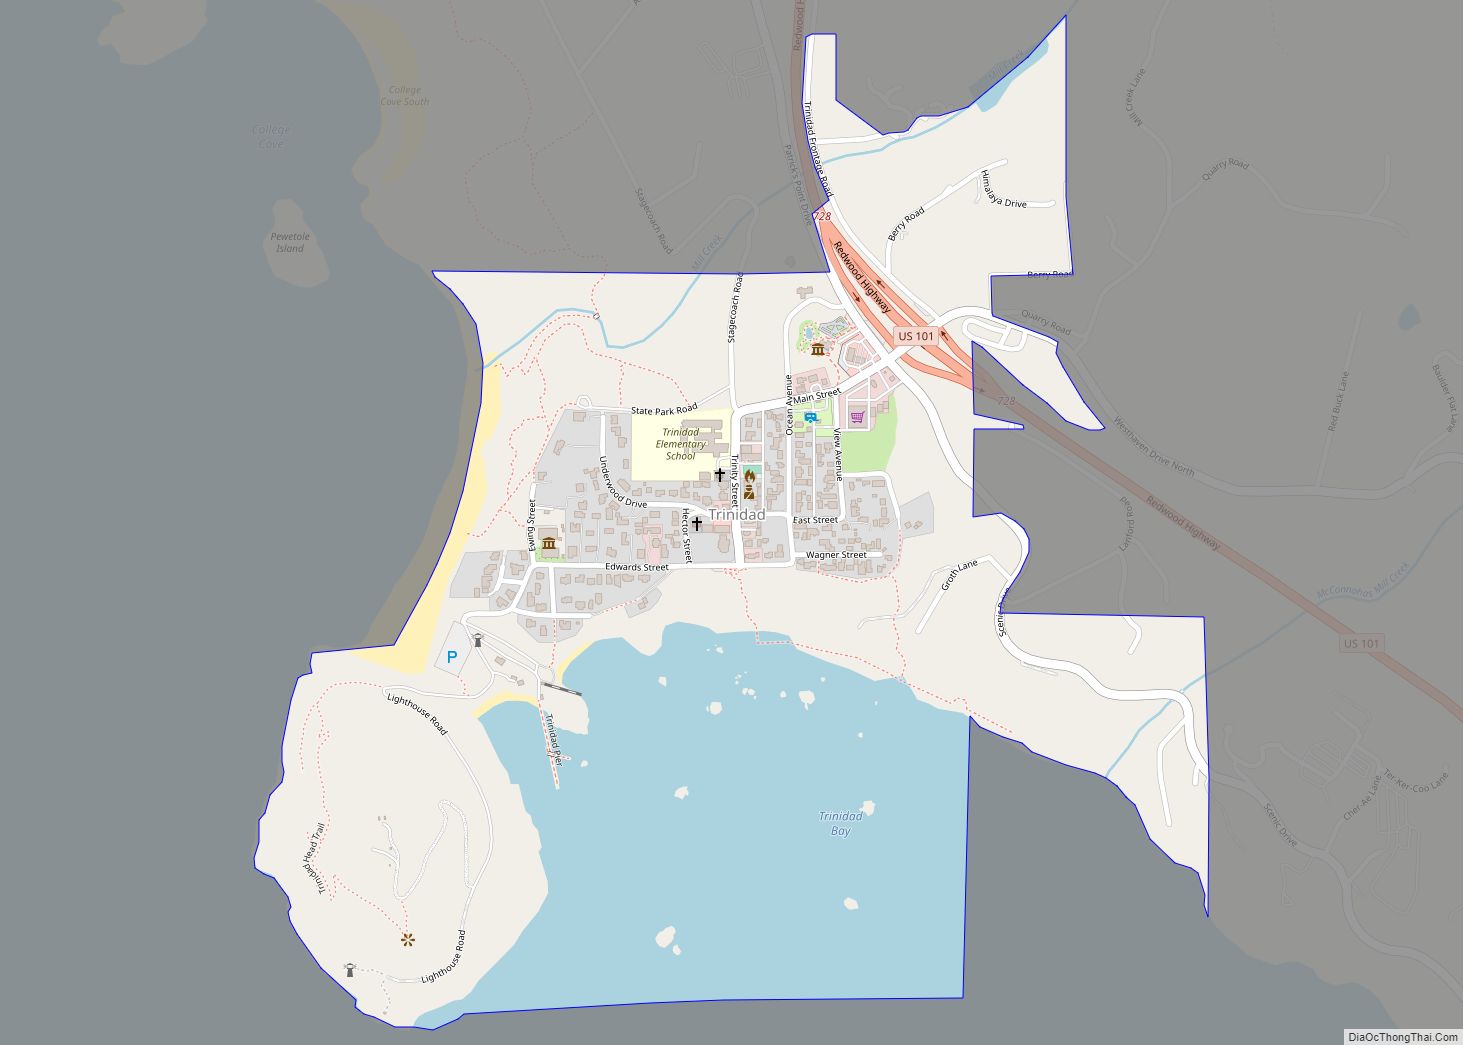 Map of Trinidad city